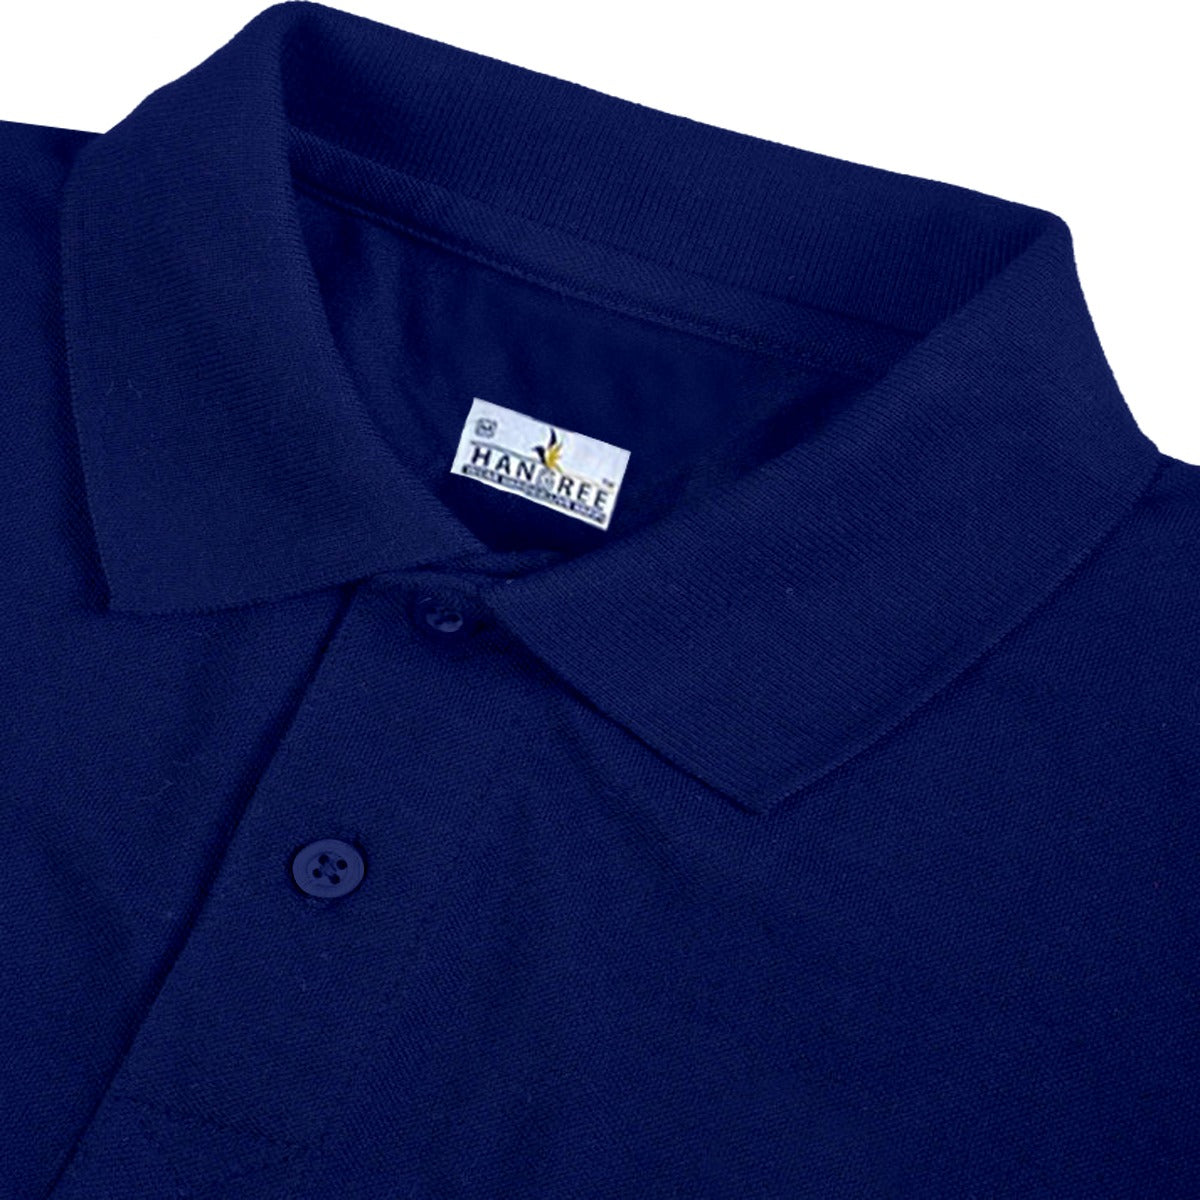 Navy Plain Polo Shirt Regular Fit